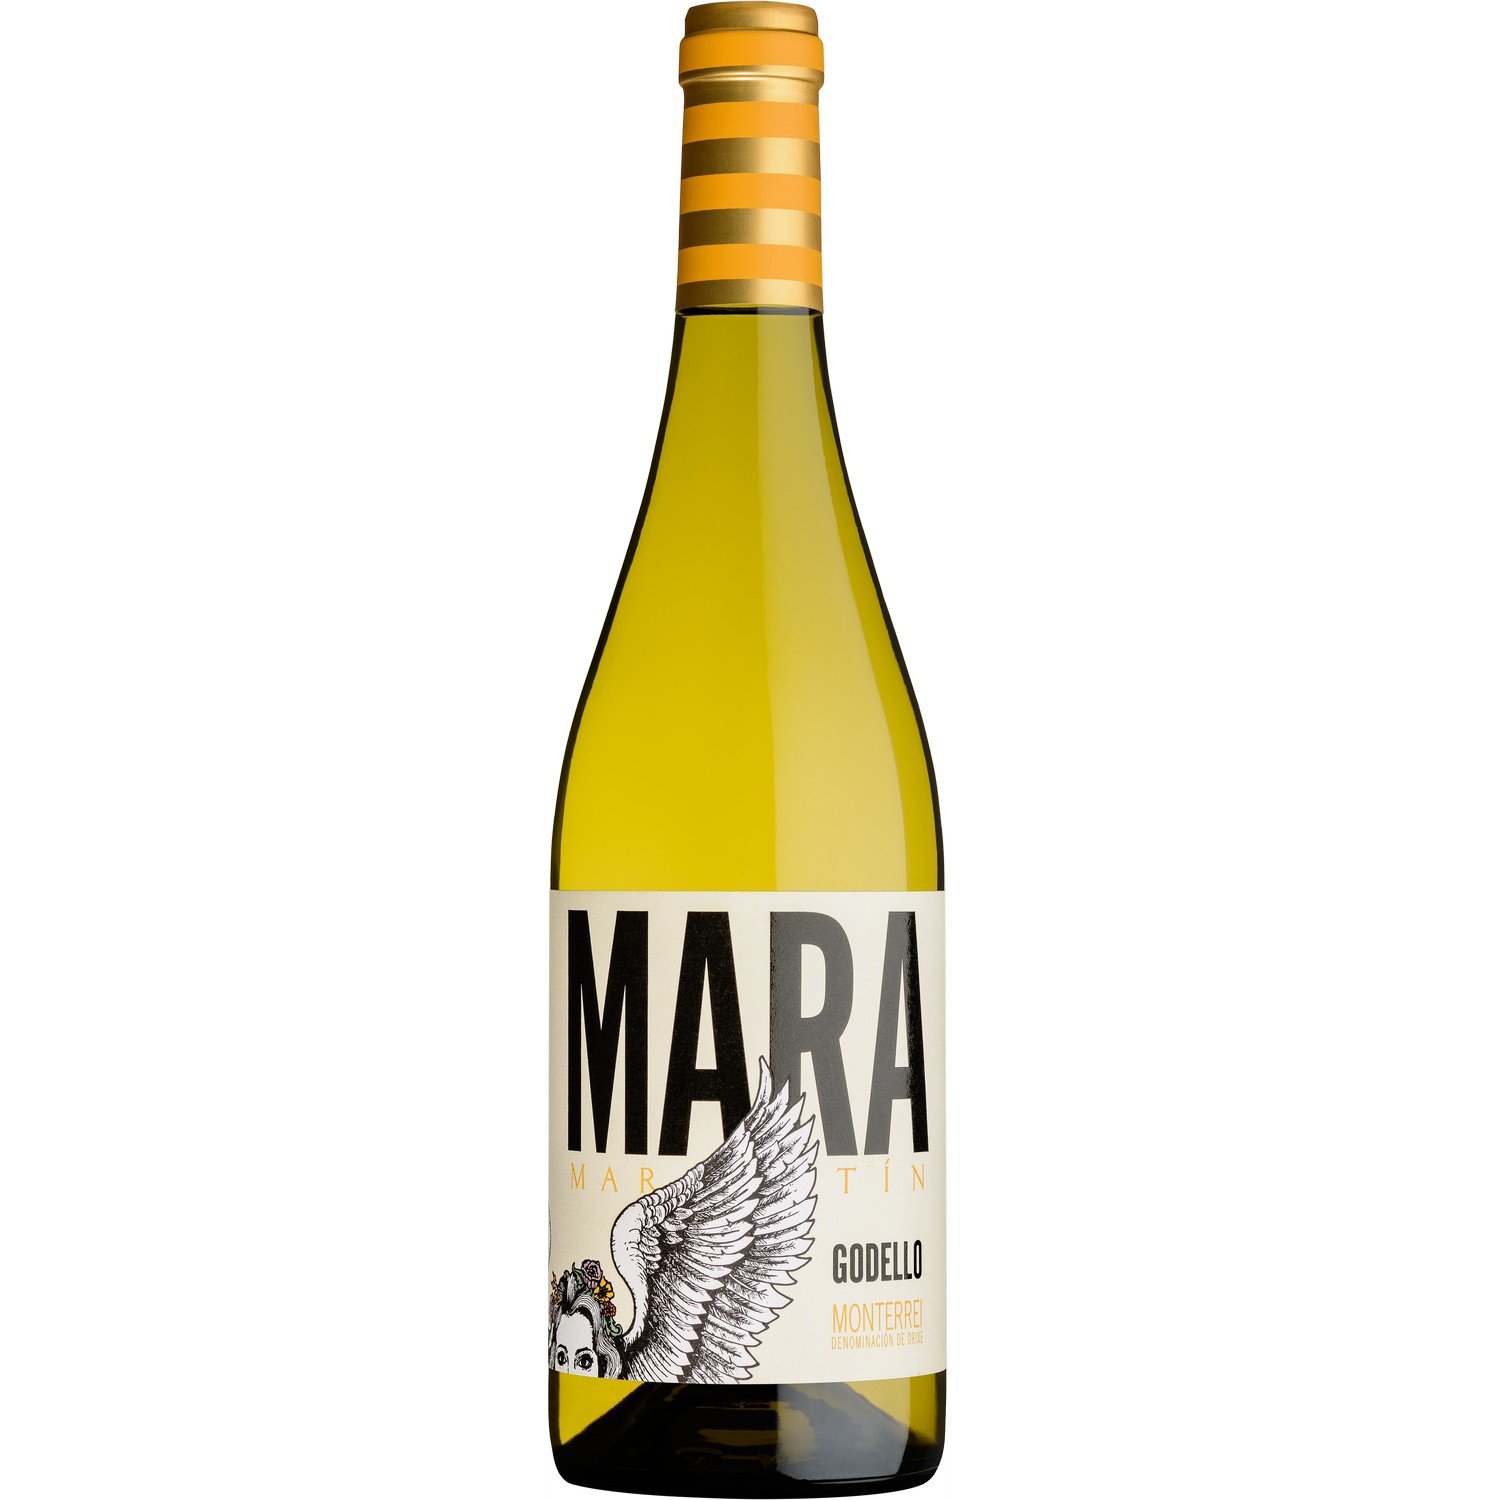 Вино Martin Codax Mara Martin Godello DO Monterrei, белое, сухое, 0,75 л - фото 1